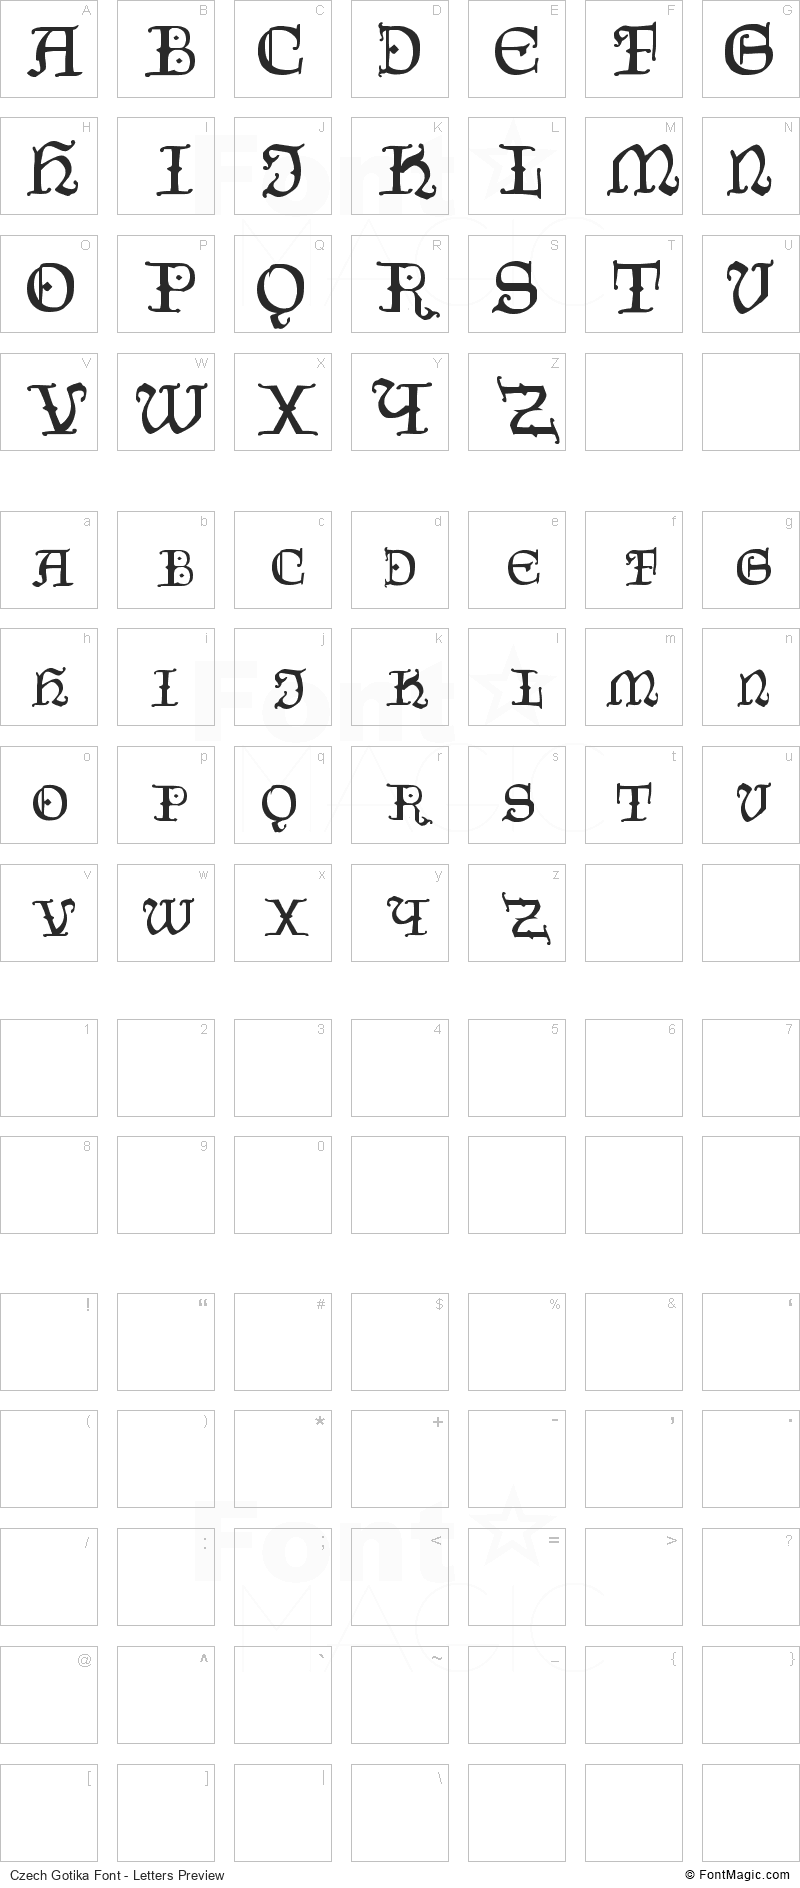 Czech Gotika Font - All Latters Preview Chart